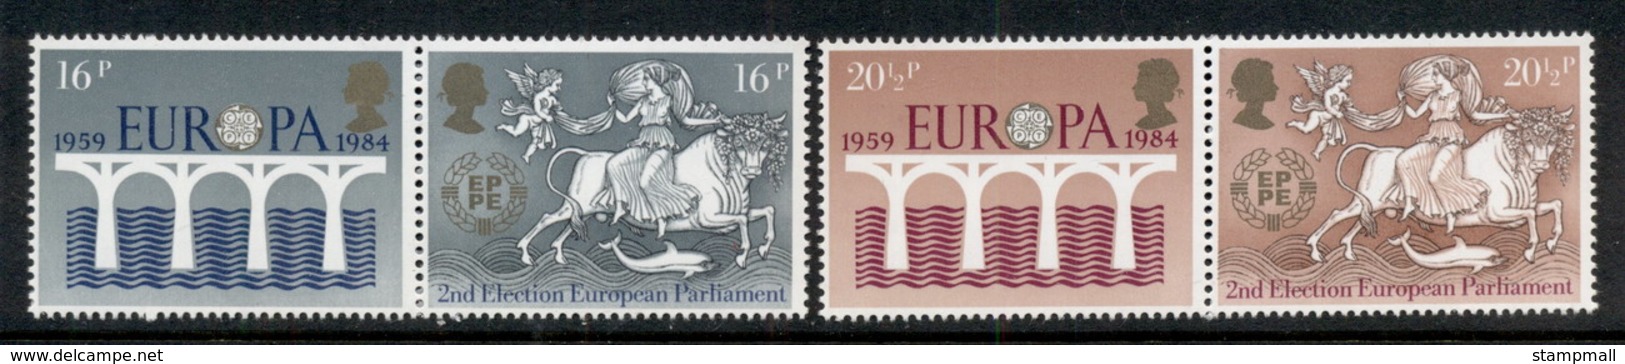 GB 1984 Europa, European Parliament MUH - Non Classés